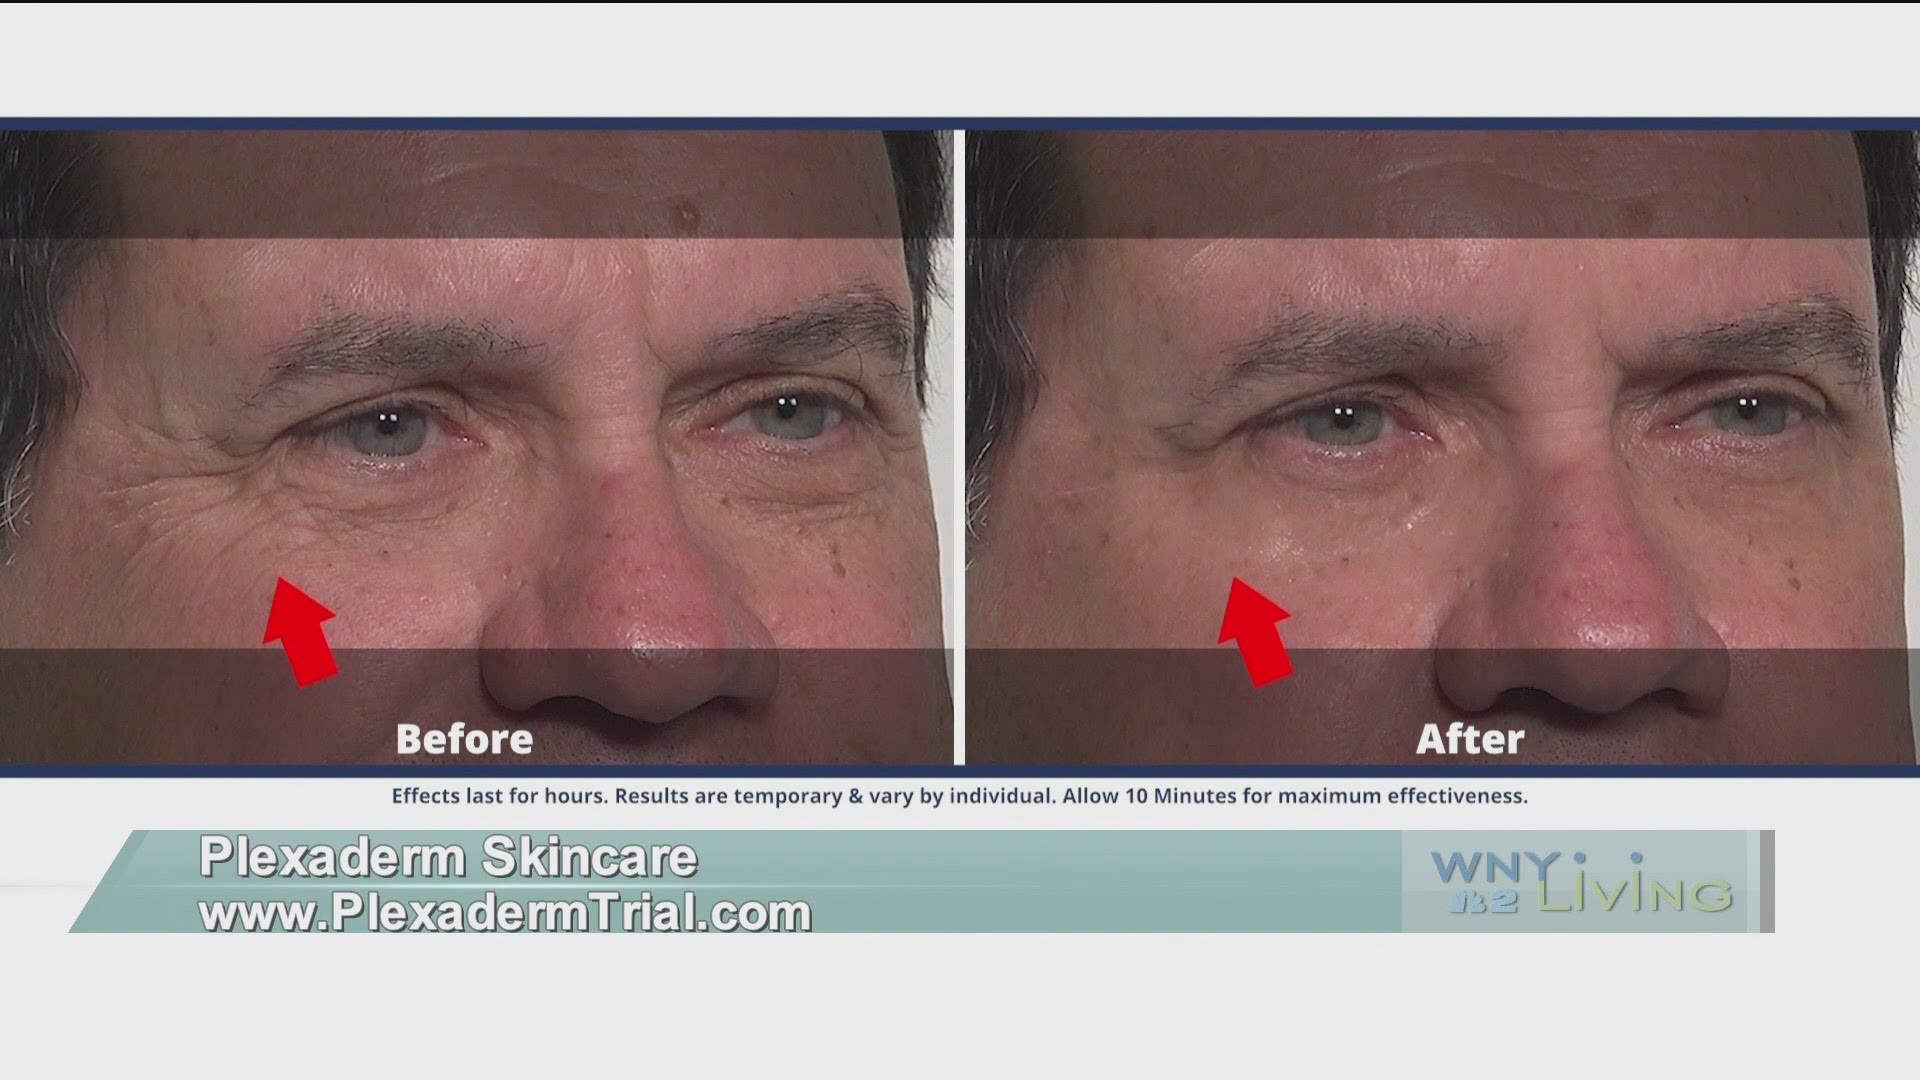 WNY Living - January 9 - Plexaderm Skincare (THIS VIDEO IS SPONSORED BY PLEXADERM SKINCARE)